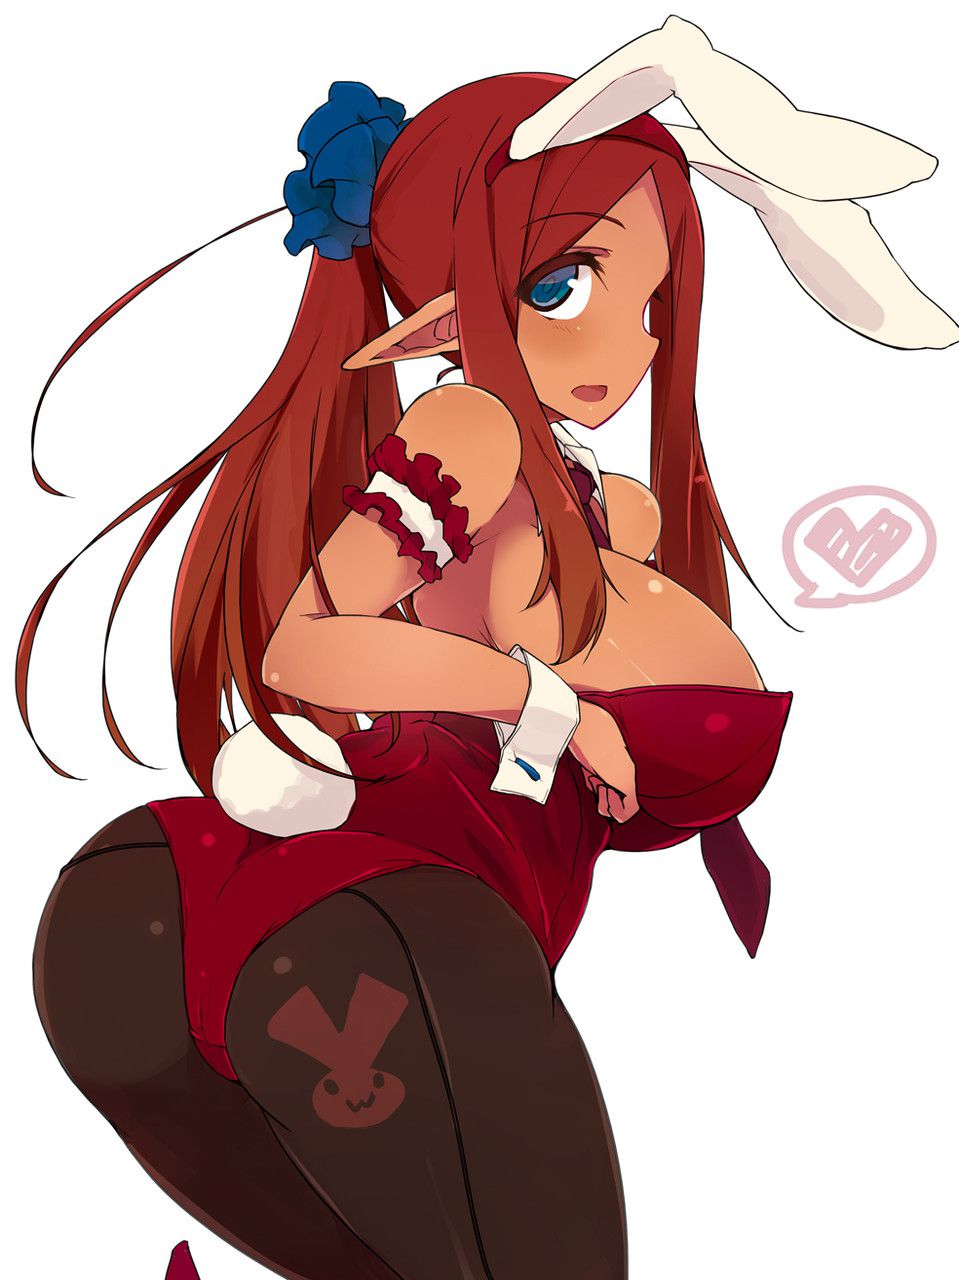 Post secondary erotic pictures of the Bunny girl getting a wwwwwwwwwwwwwwwwwww 15